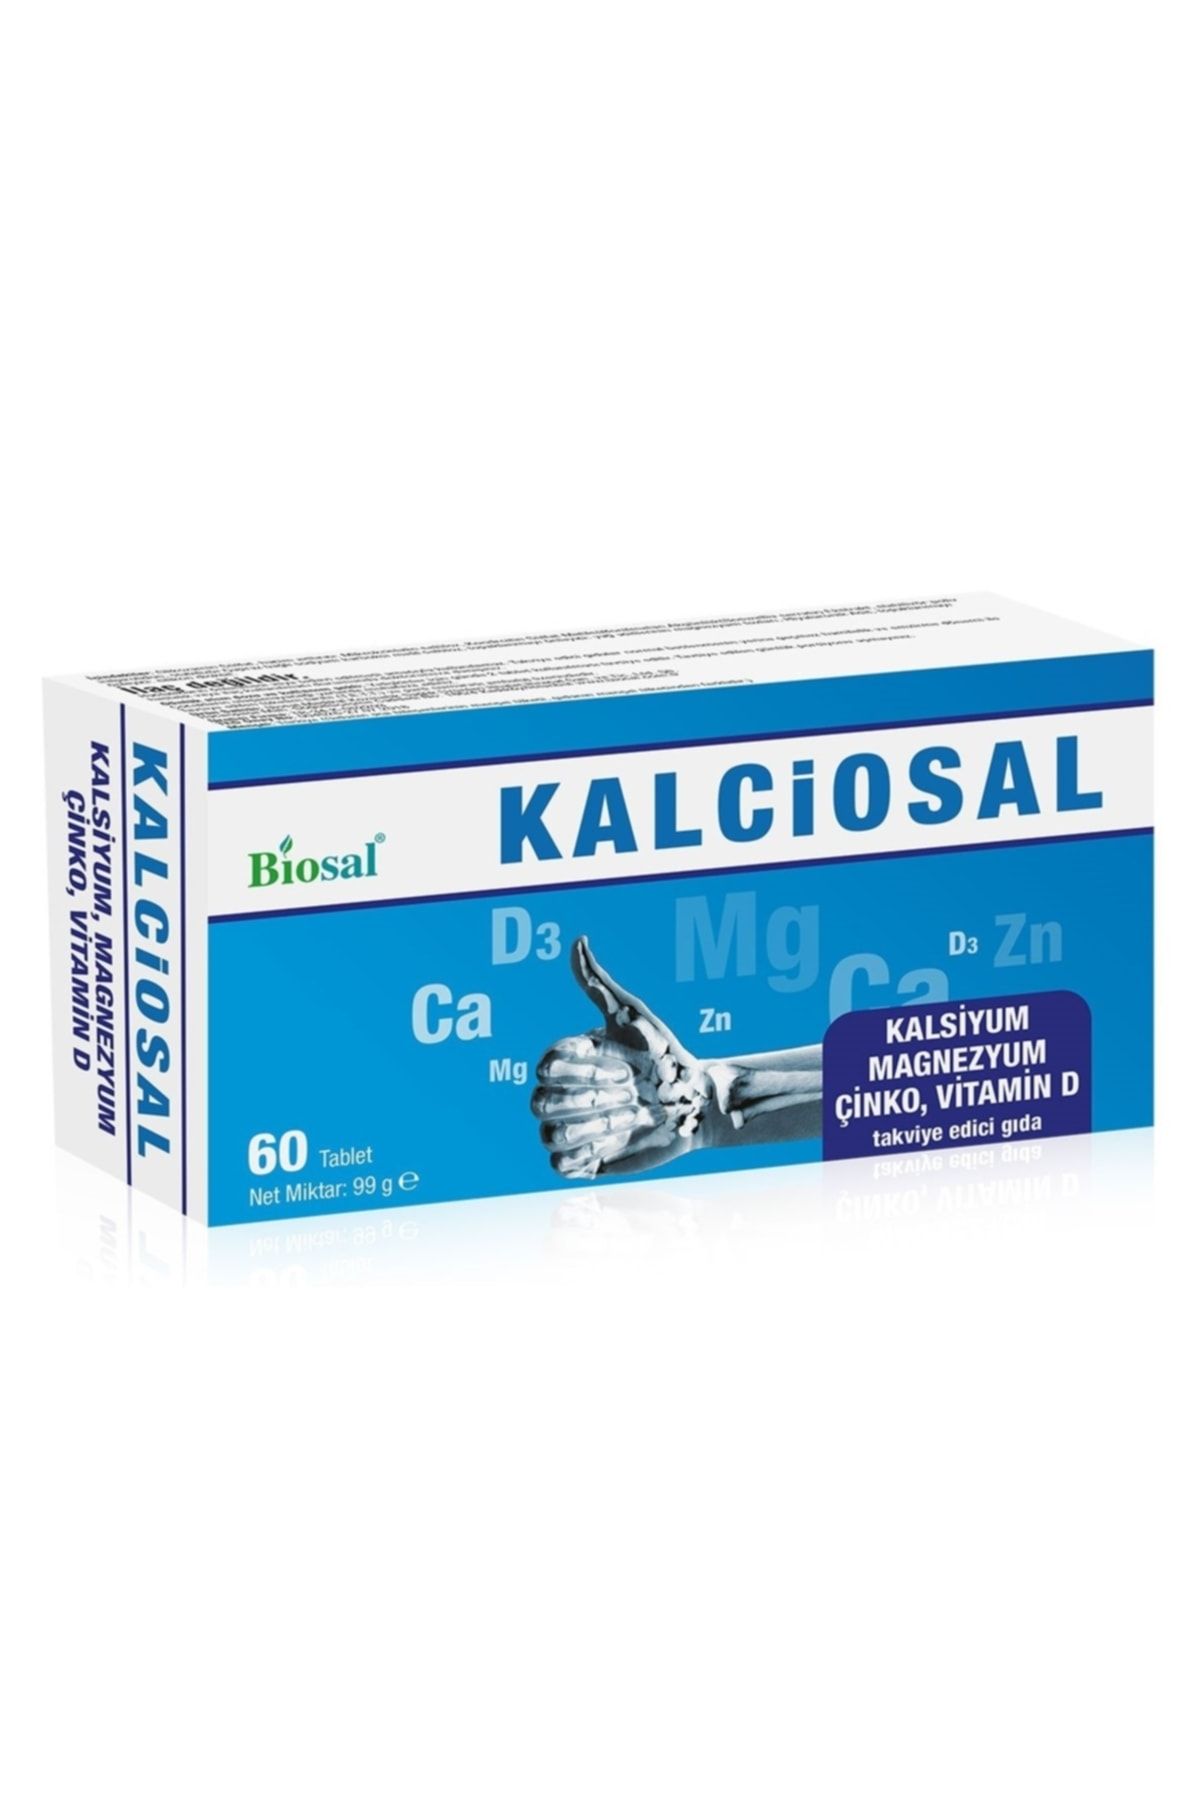 Biosal Kalsiyum Magnezyum Çinko Vitamin D 60 Tablet Kalciosal